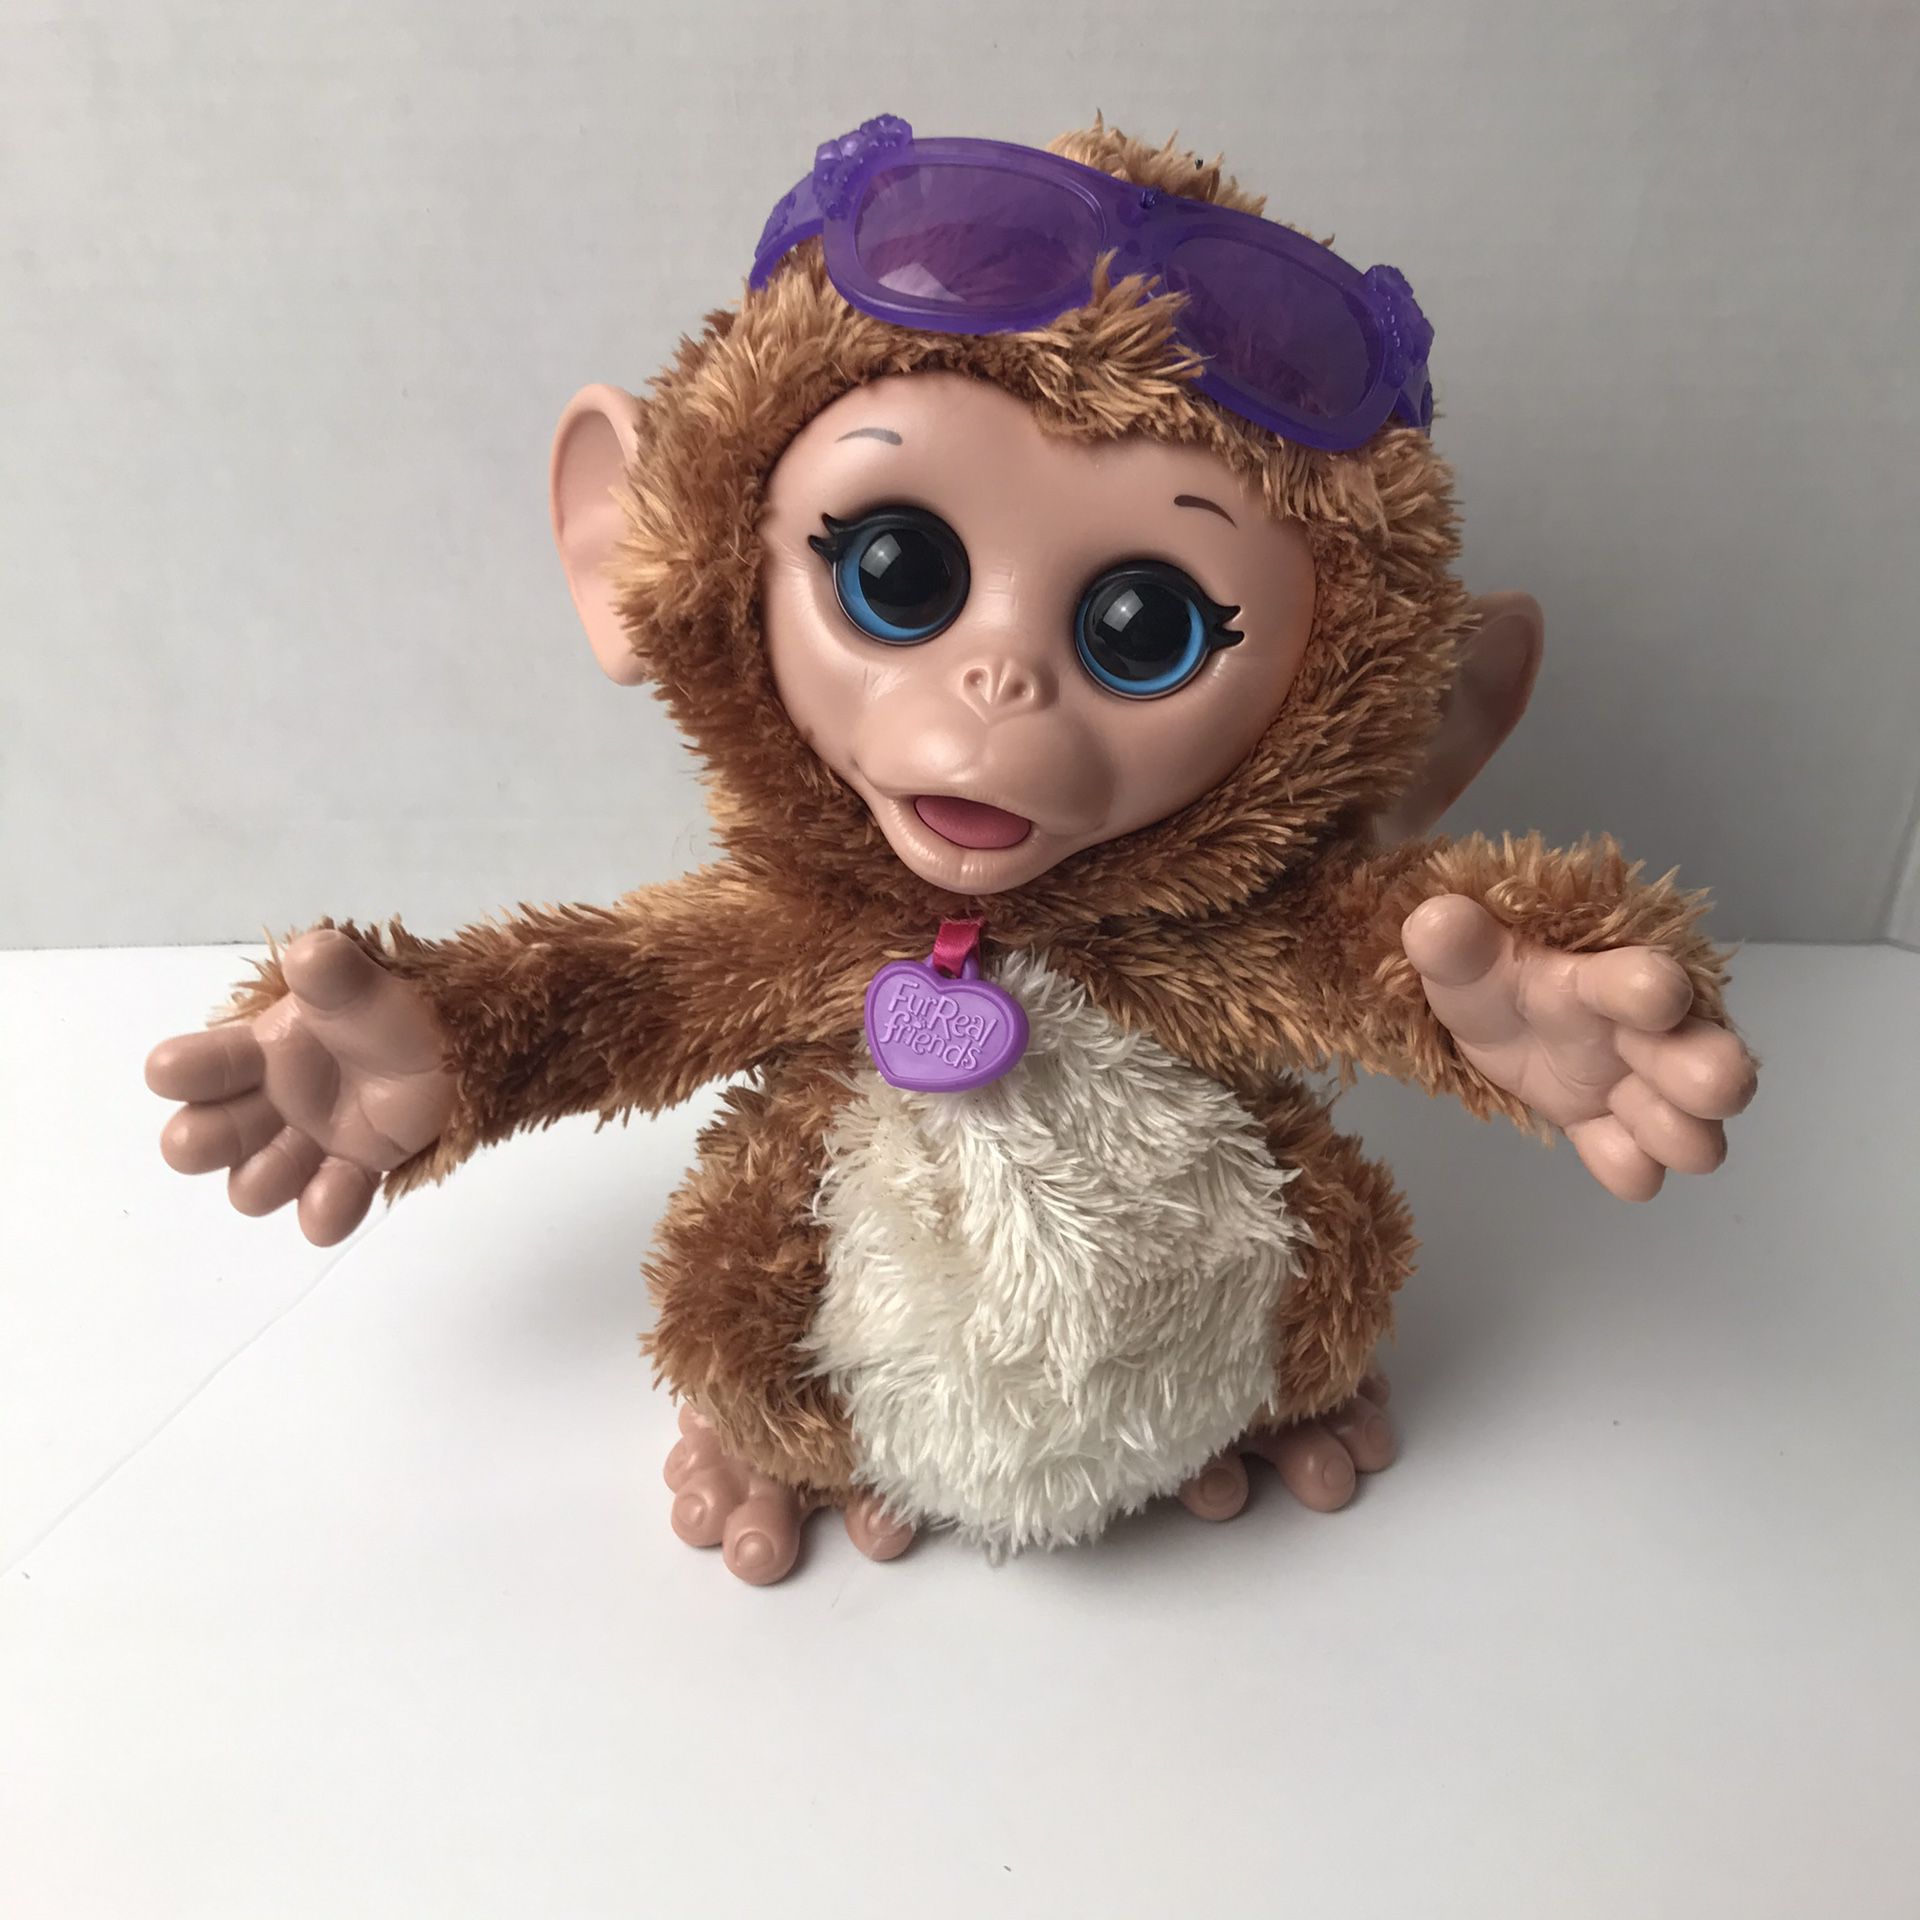 Furreal Friends Giggley Monkey Interactive Dancing Plush Pet Toy Hasbro 2013